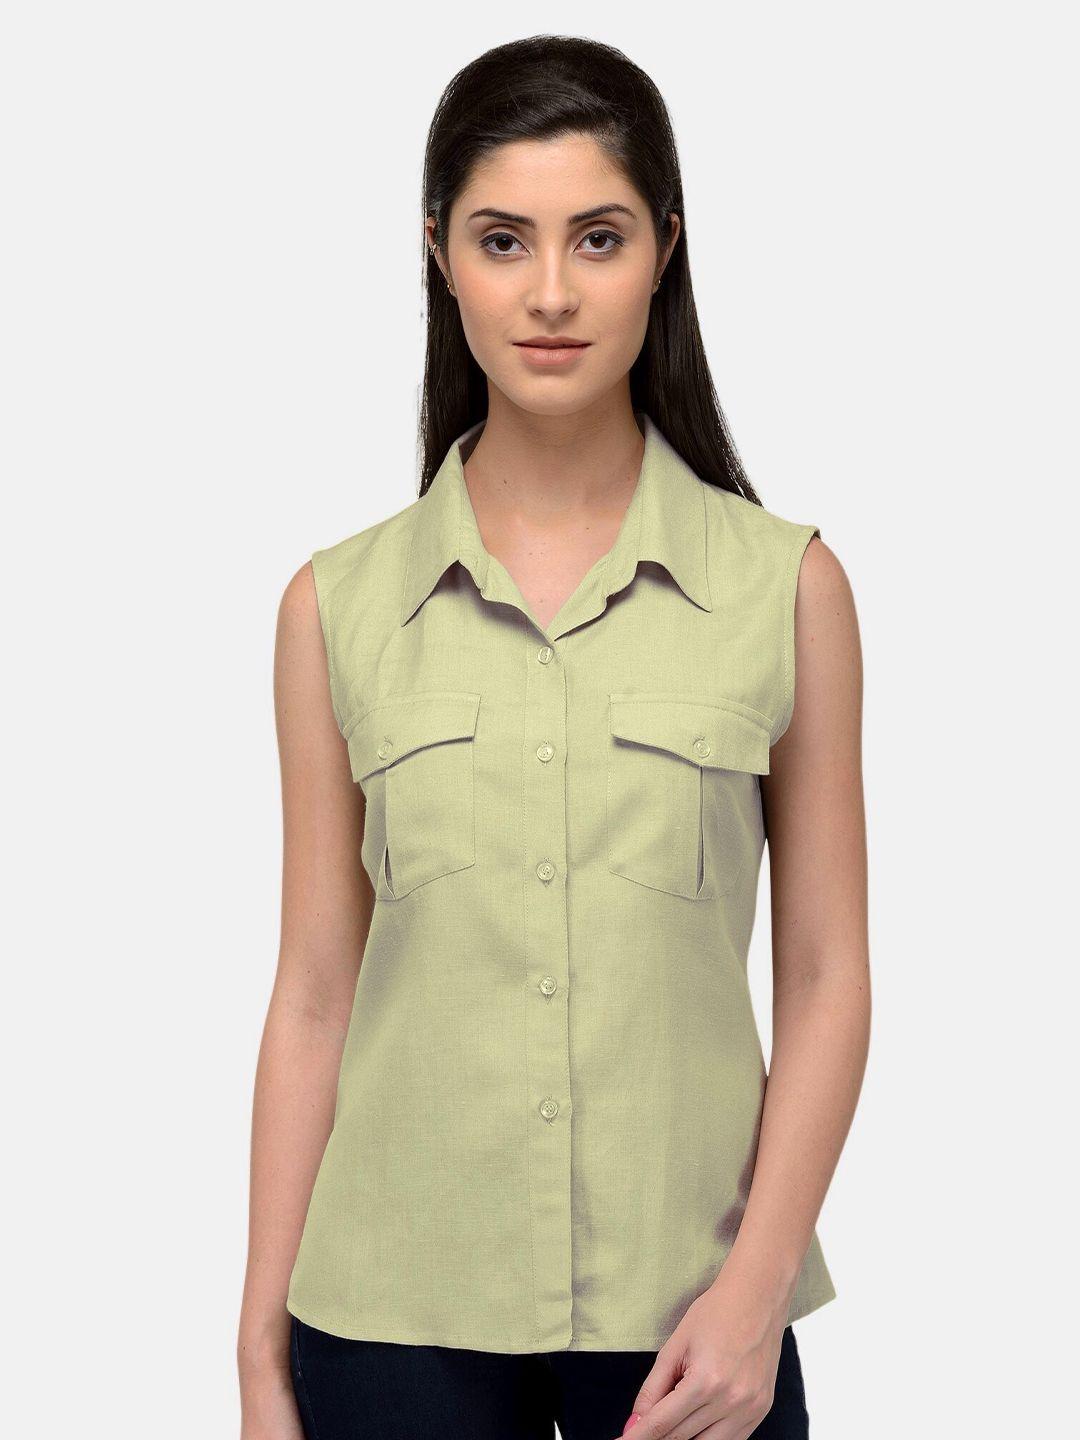 patrorna women cream-coloured solid comfort casual shirt